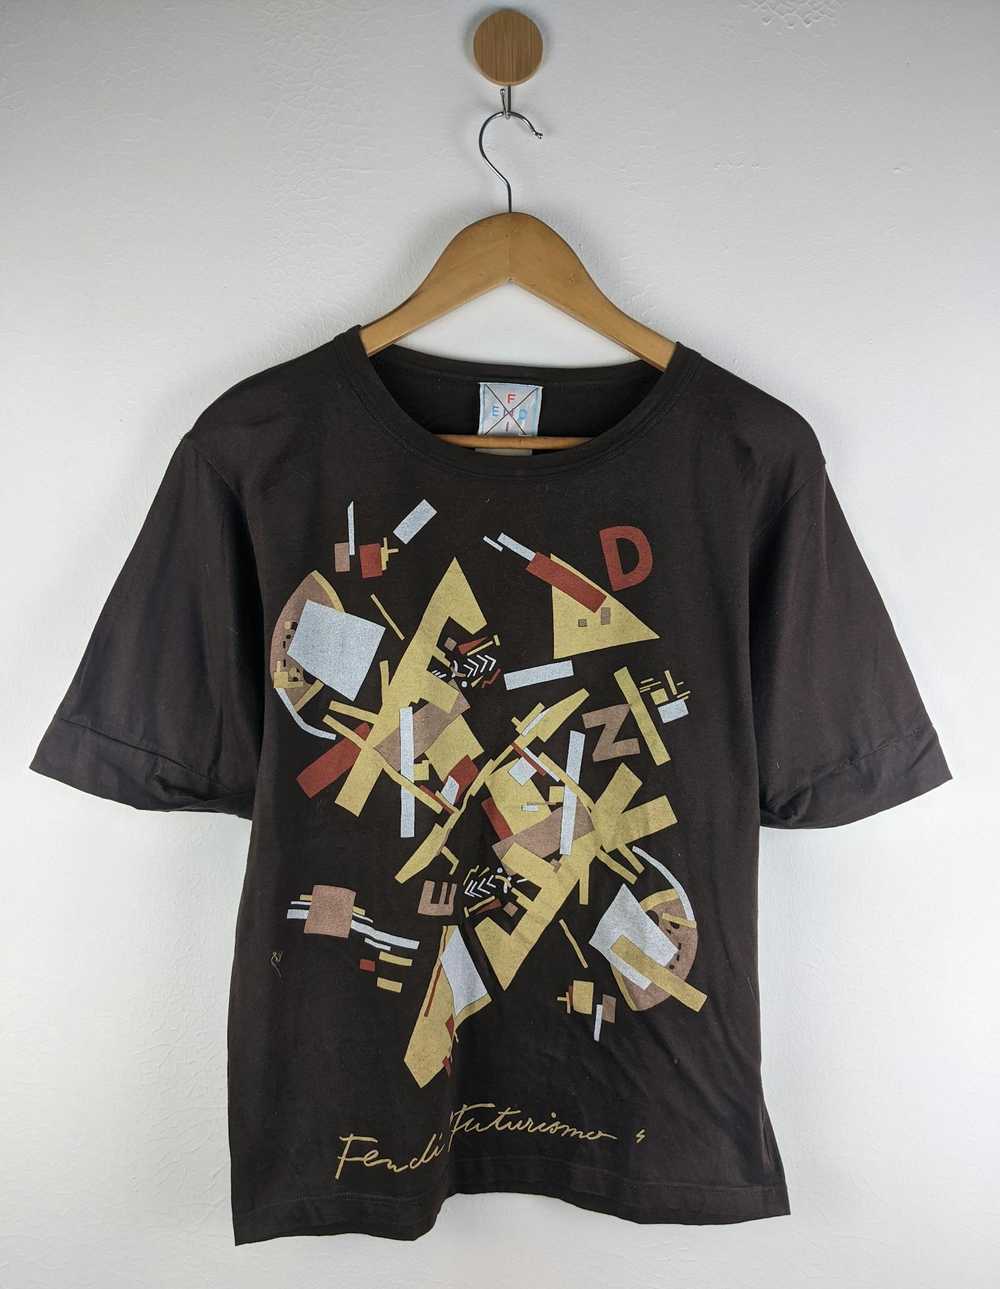 Fendi Fendi Futurism shirt - image 1